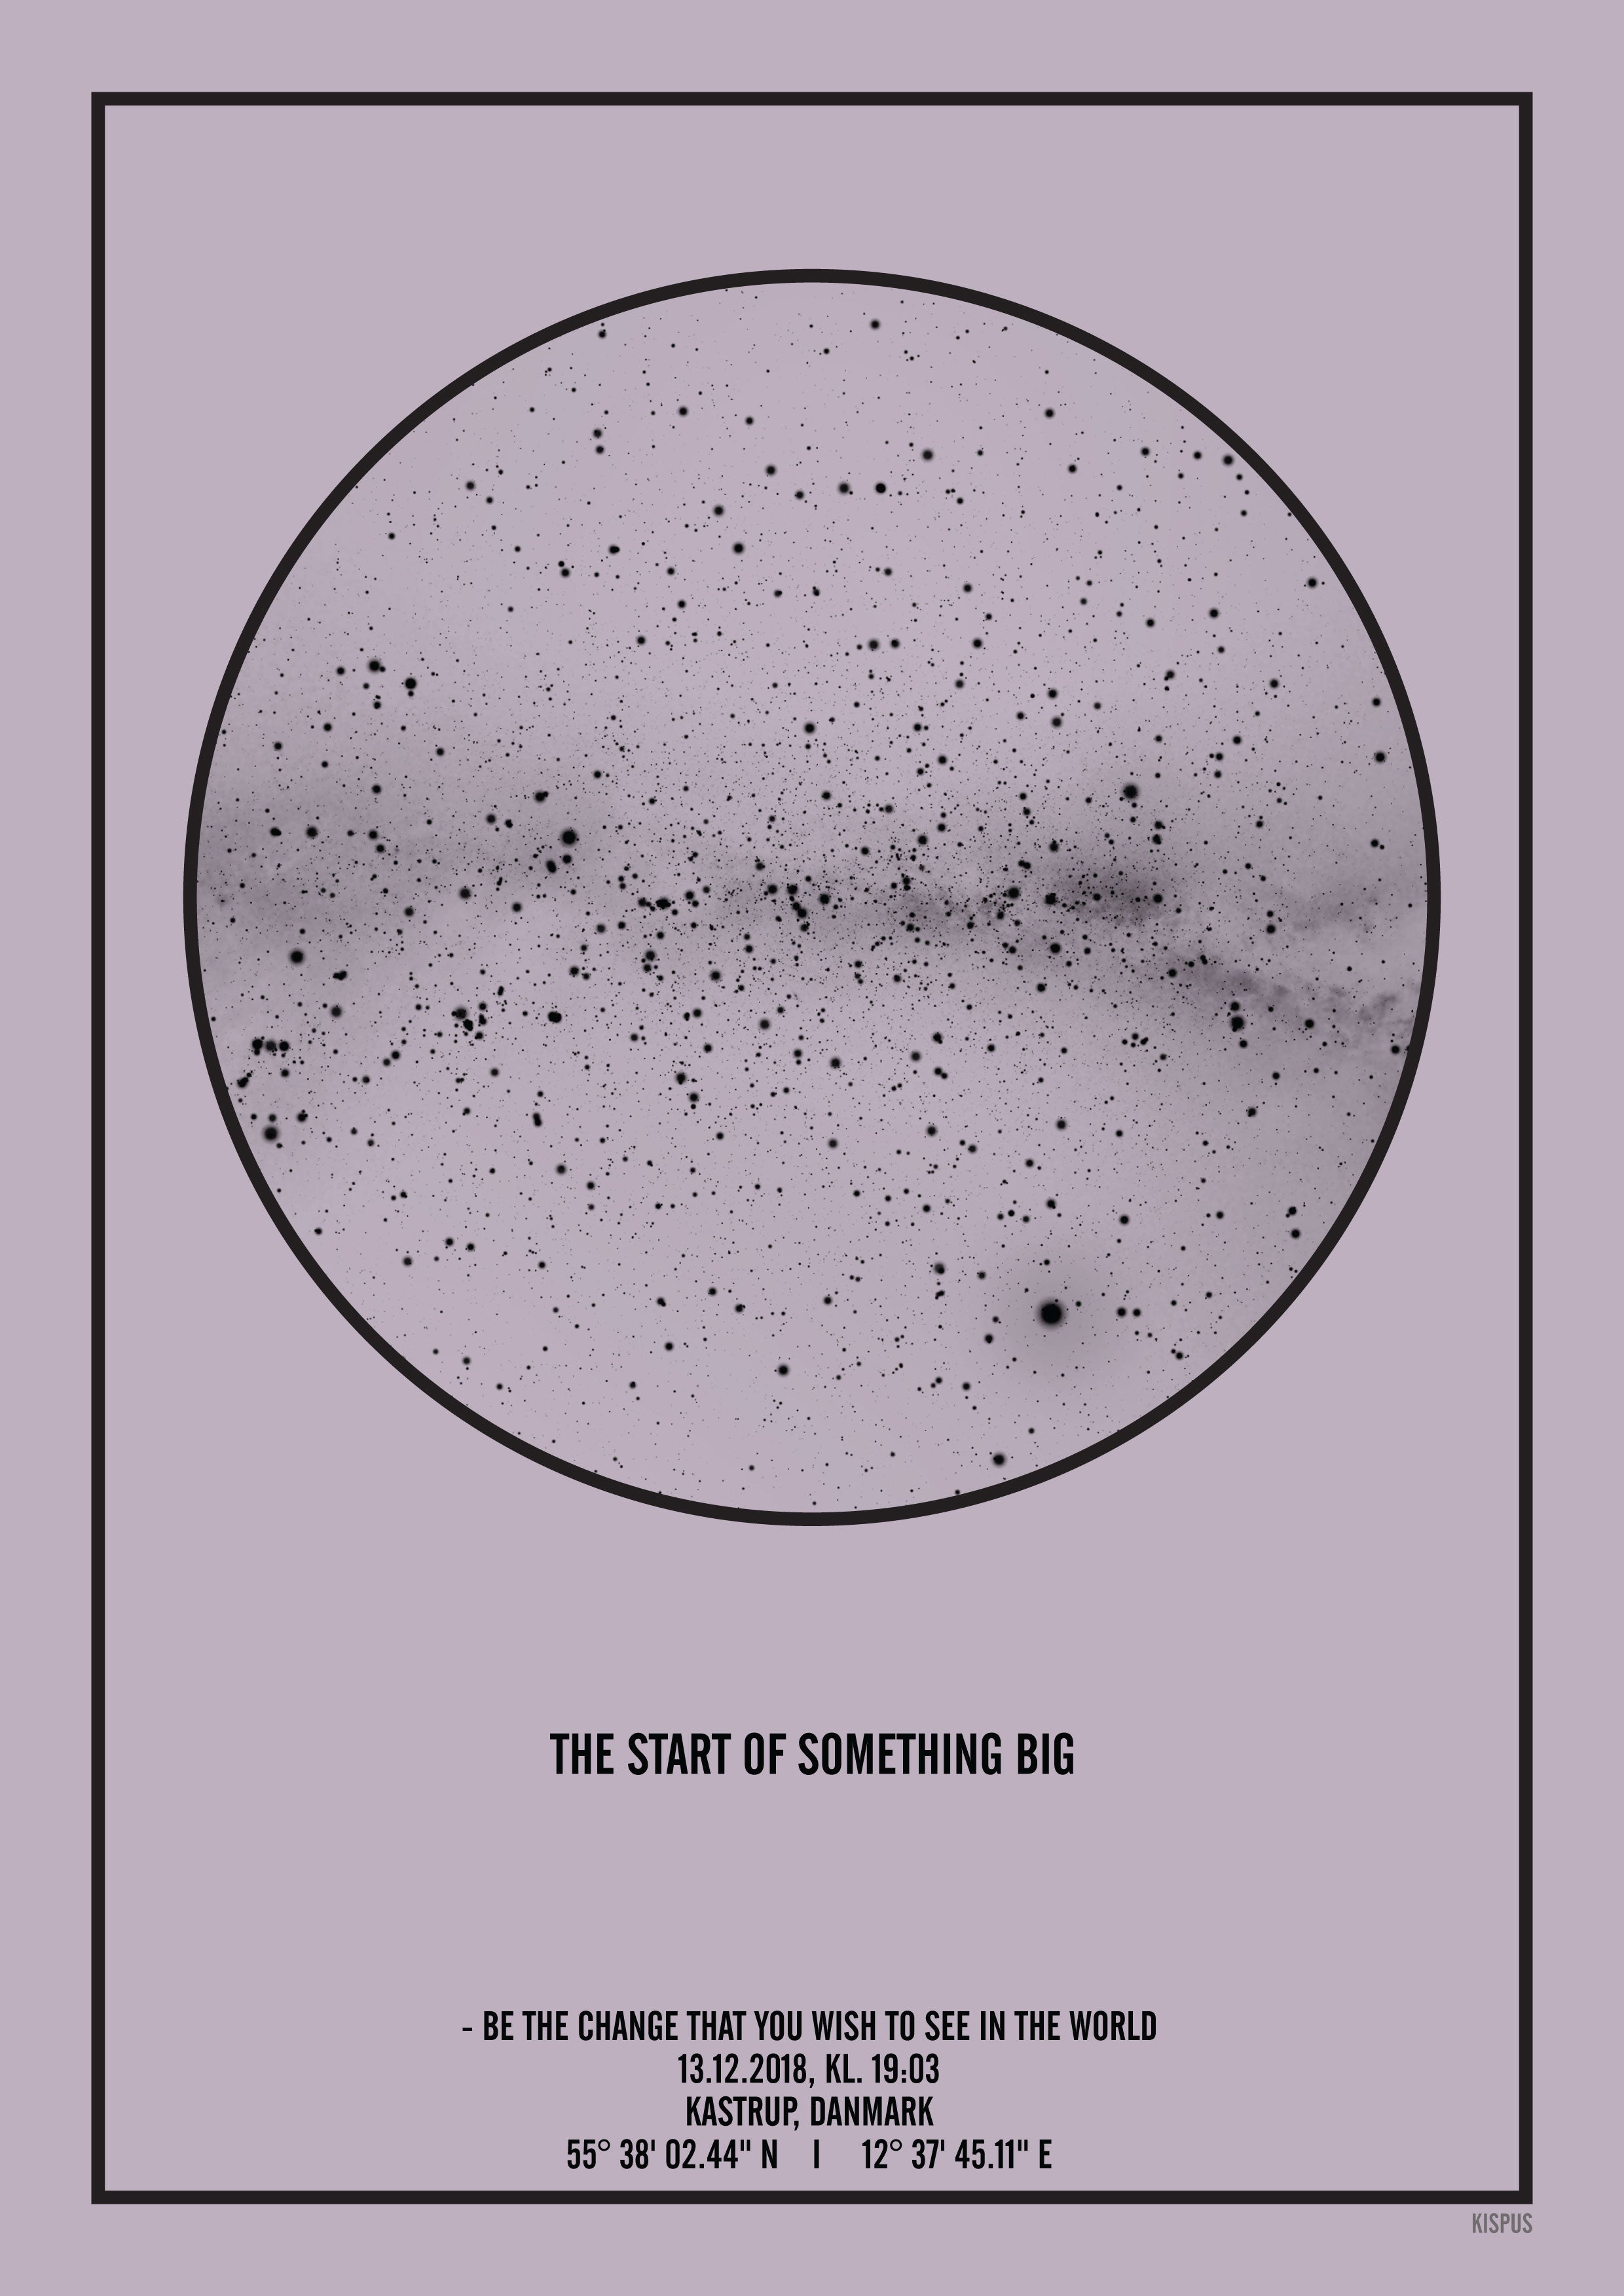 Se PERSONLIG STJERNEHIMMEL PLAKAT (LYSELILLA) - 50x70 / Sort tekst og lyselilla stjernehimmel / Stjernehimmel med mælkevej hos KISPUS